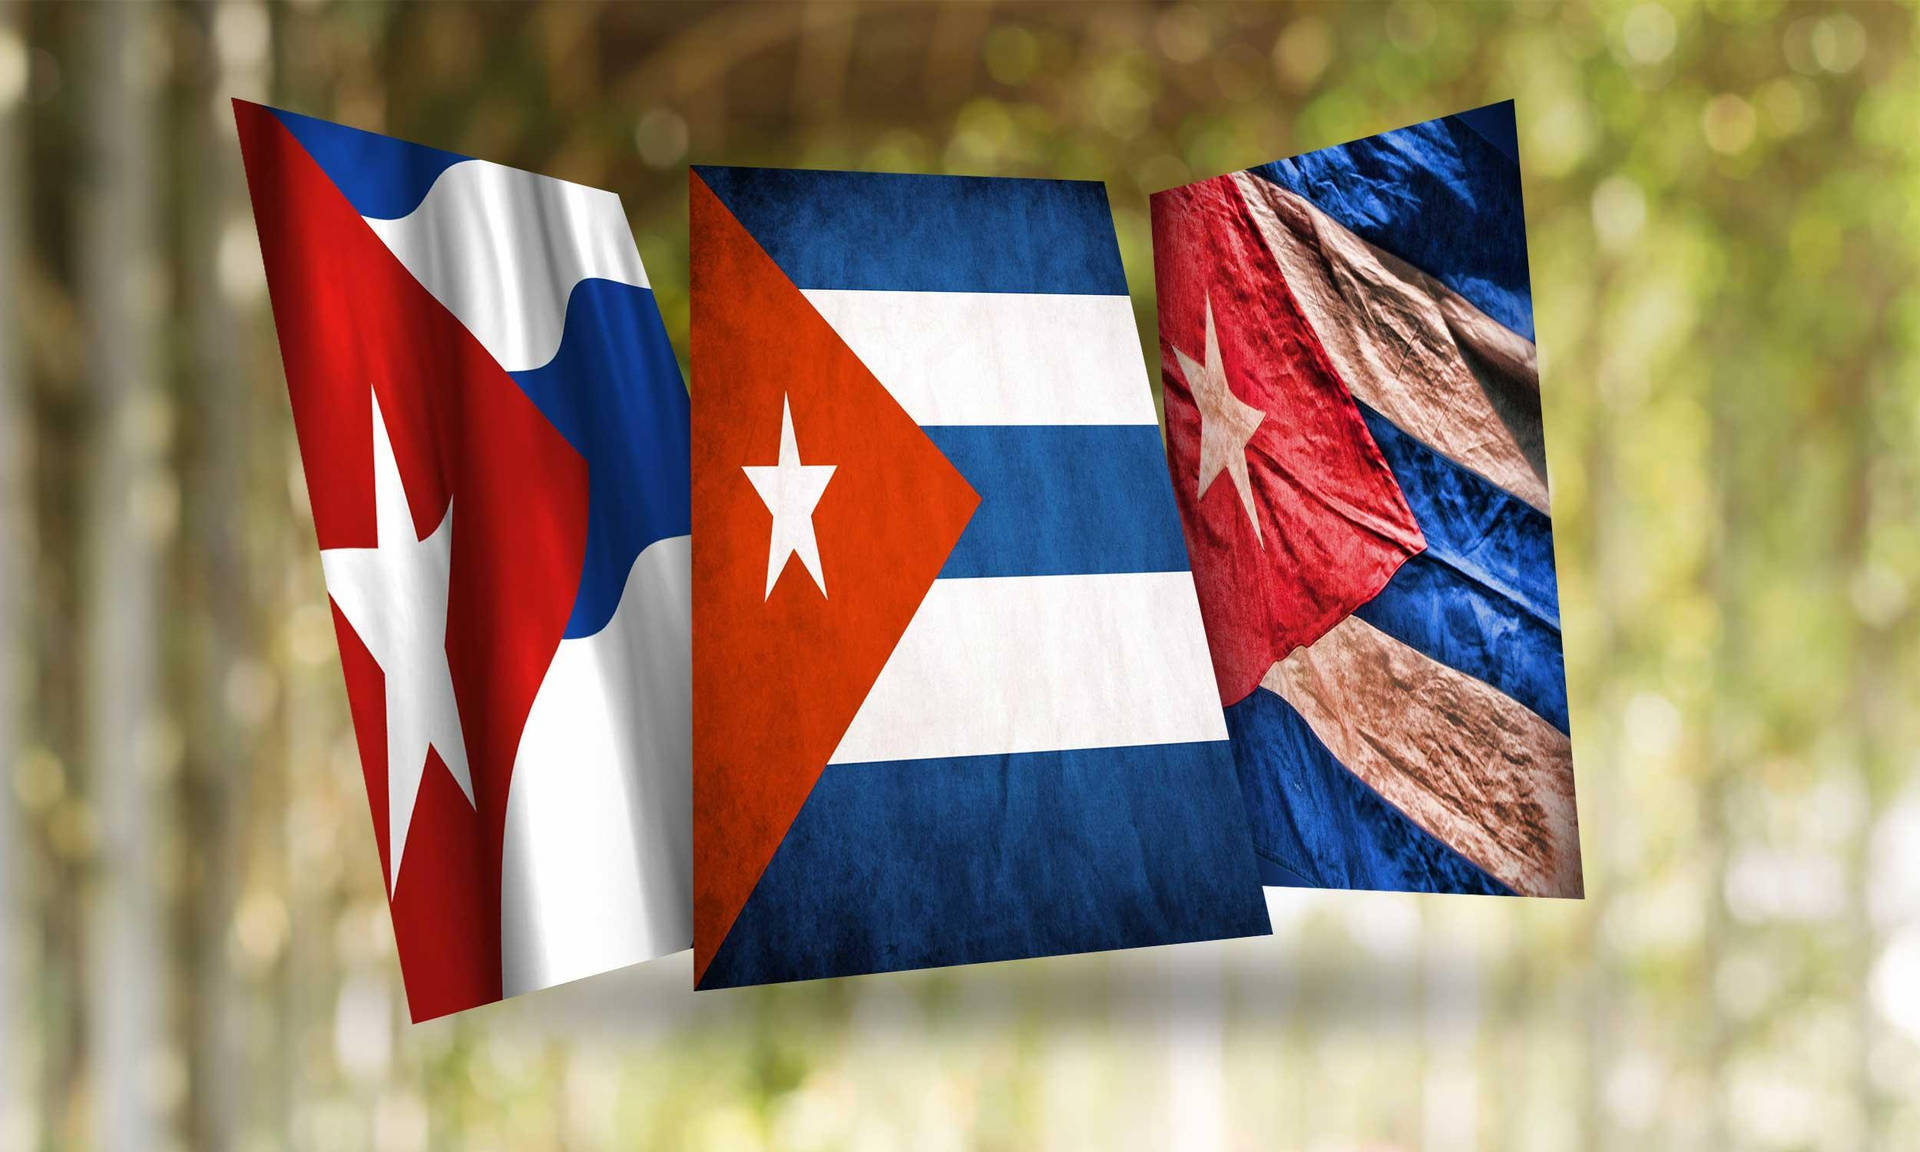 Cuban Flag Image Series Background